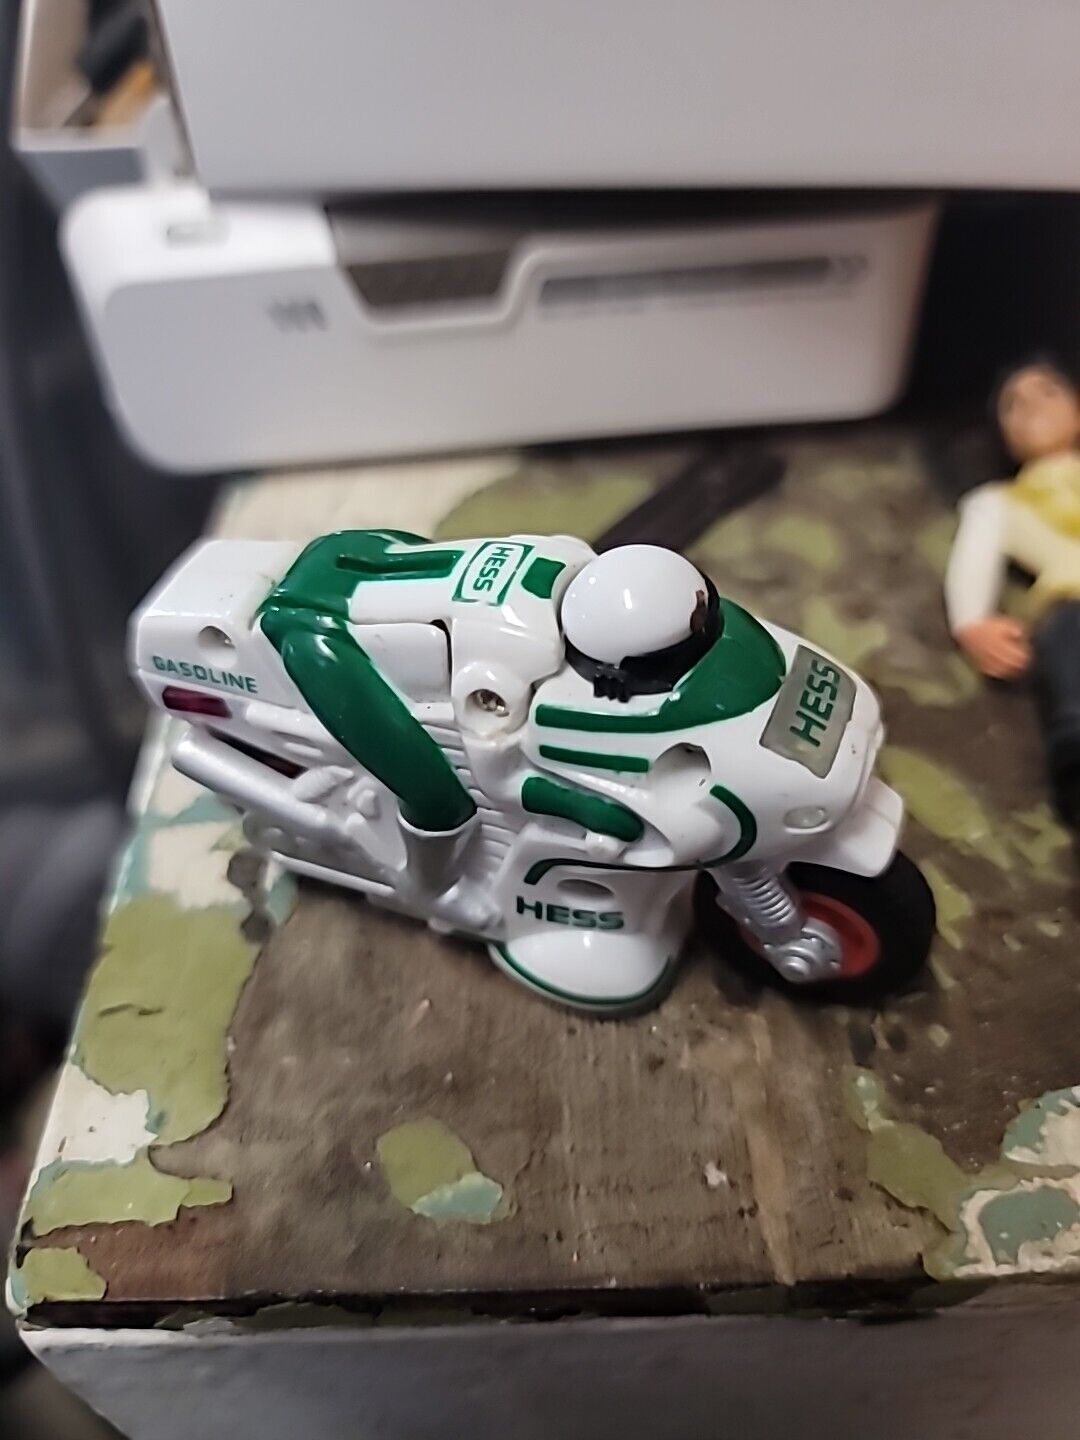 2001 miniature hess Motorcycle WORKING